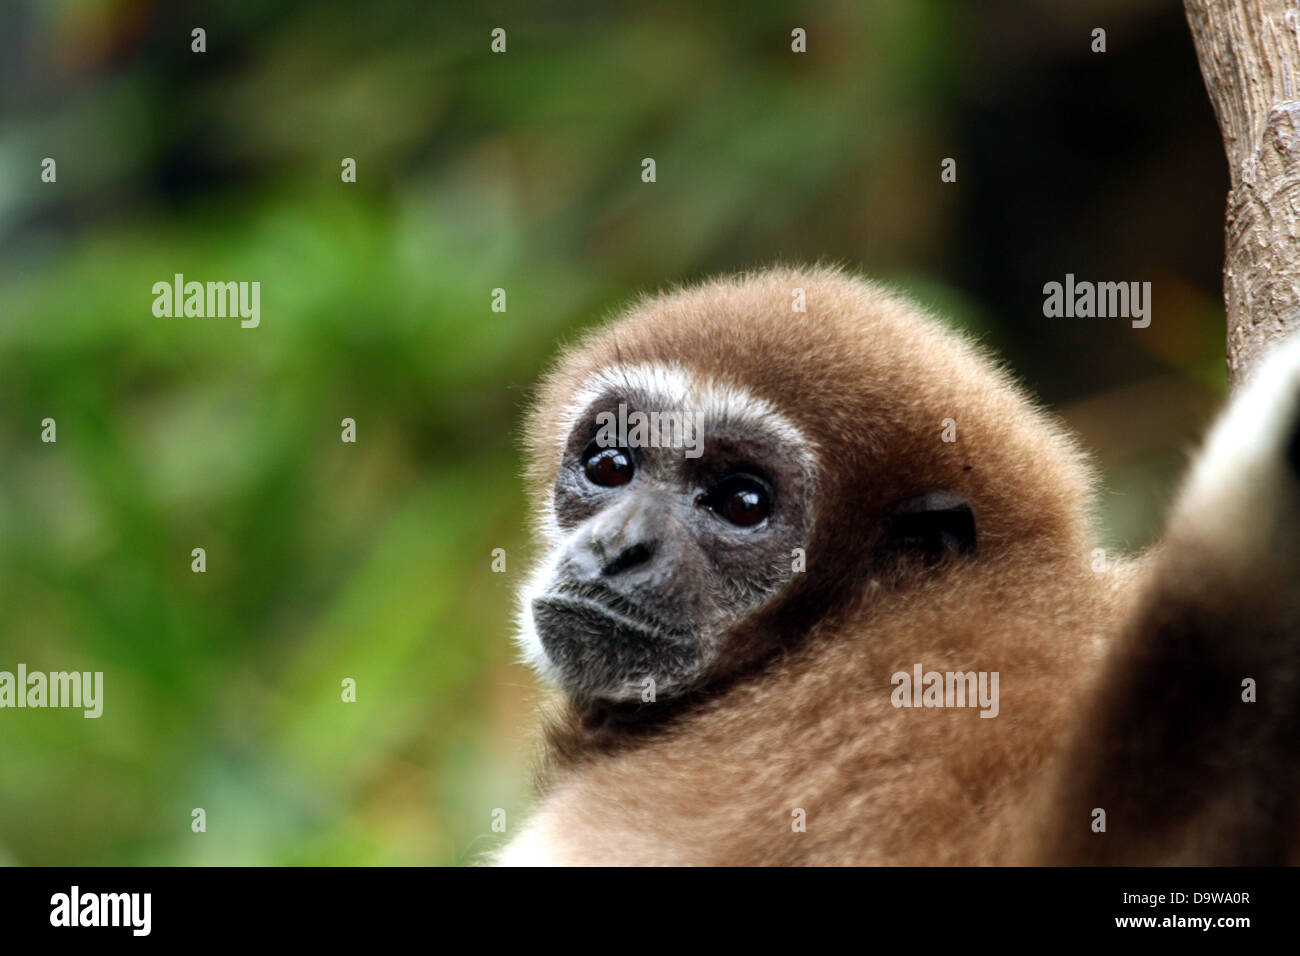 Common squirrel monkey close up Stock Photo